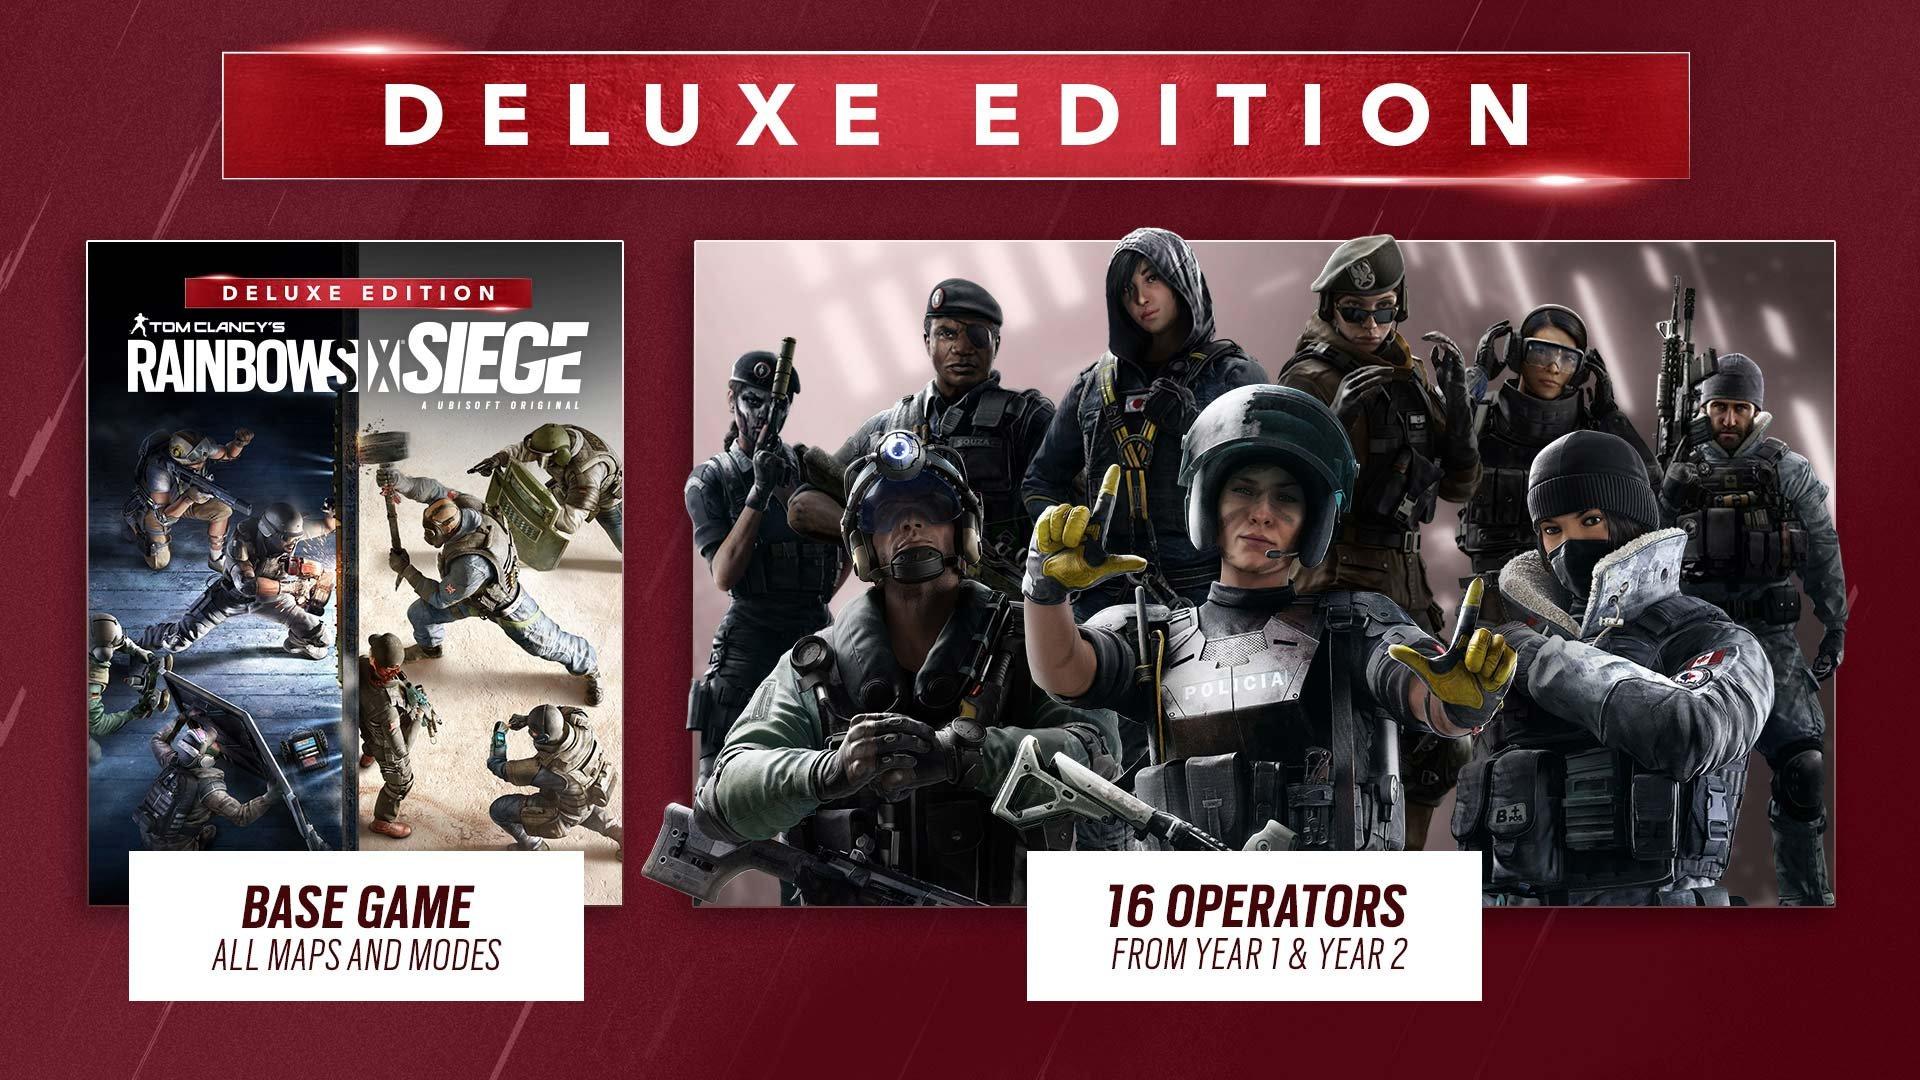 Tom Clancy's Rainbow Six: Siege Deluxe Edition